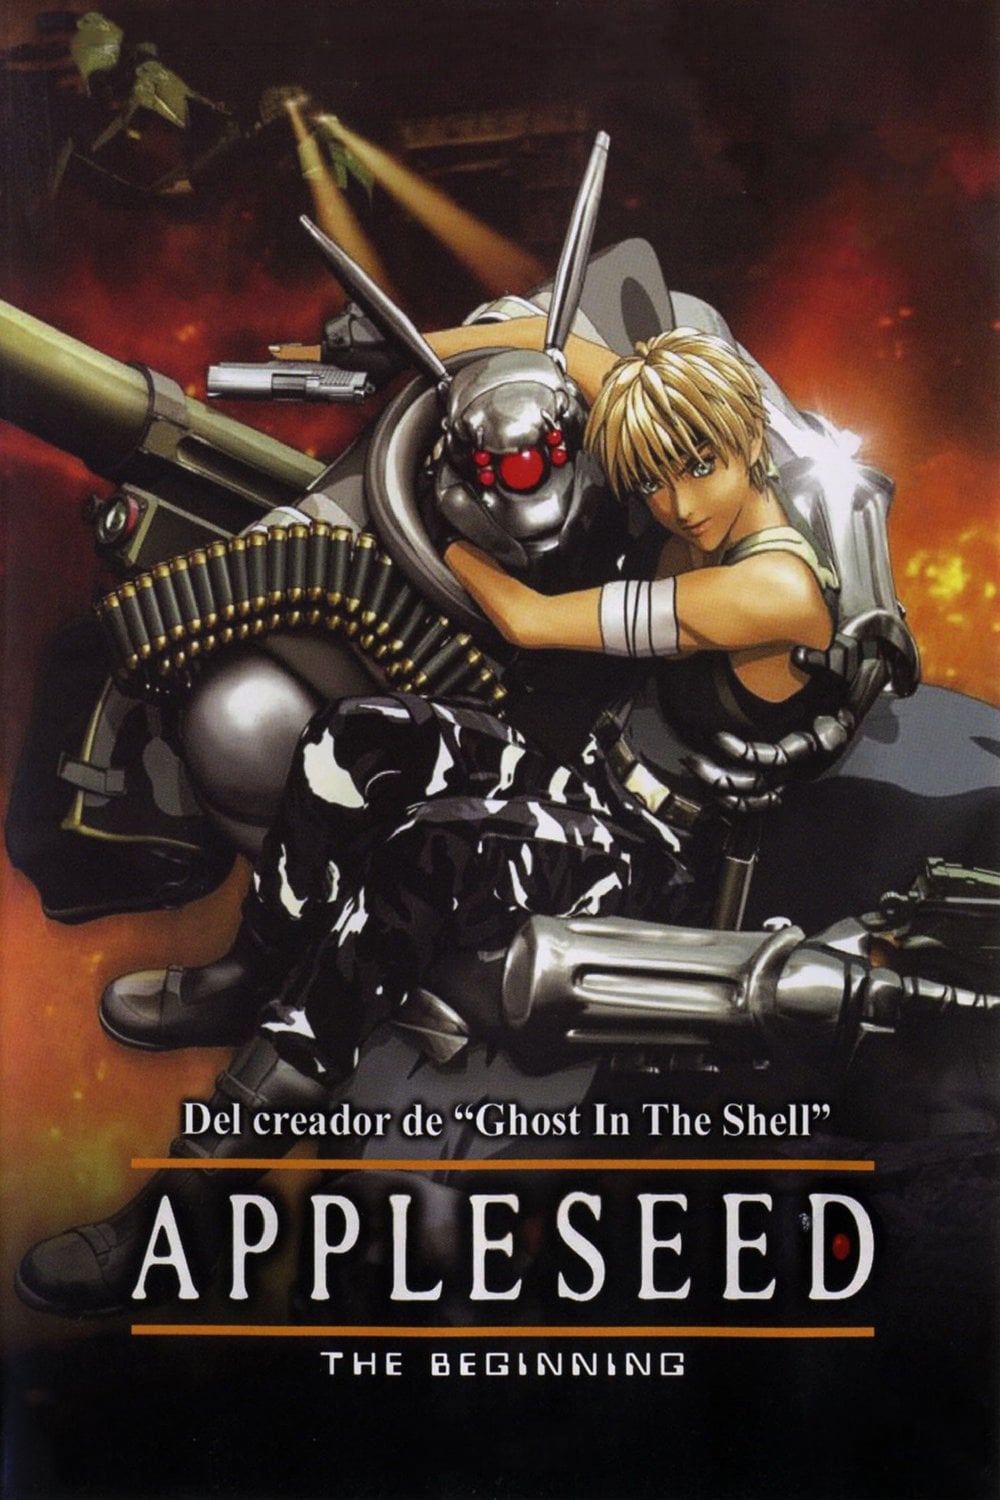 Appleseed (2004) • movies.film-cine.com